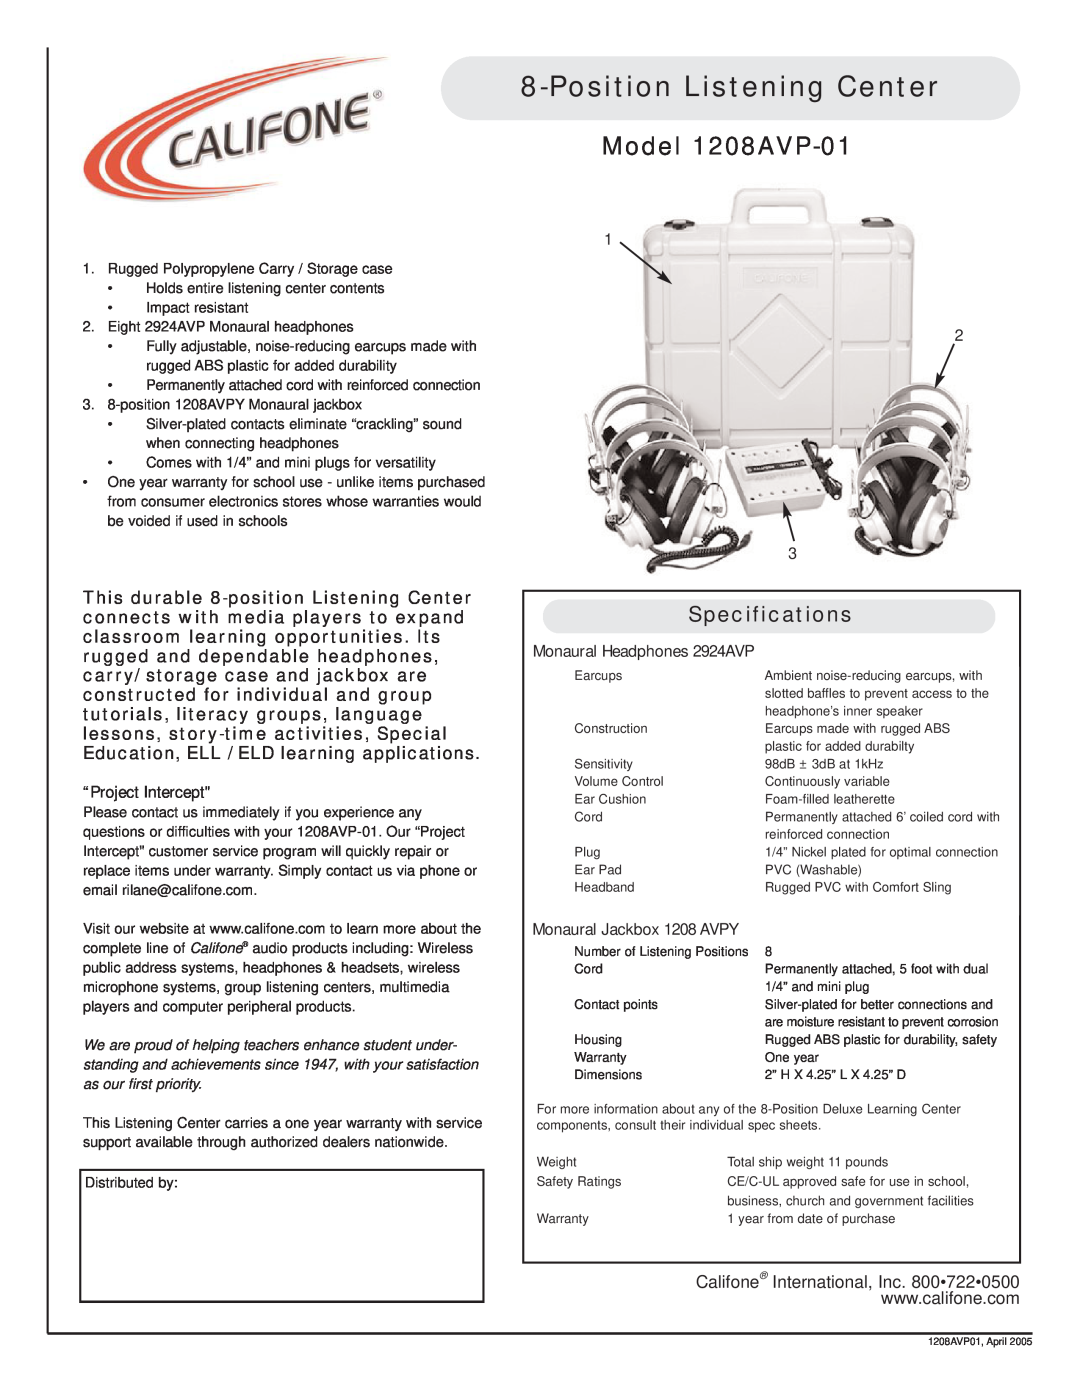 Califone specifications PositionListening Center, Model 1208AVP-01, Specifications, Califone International, Inc 